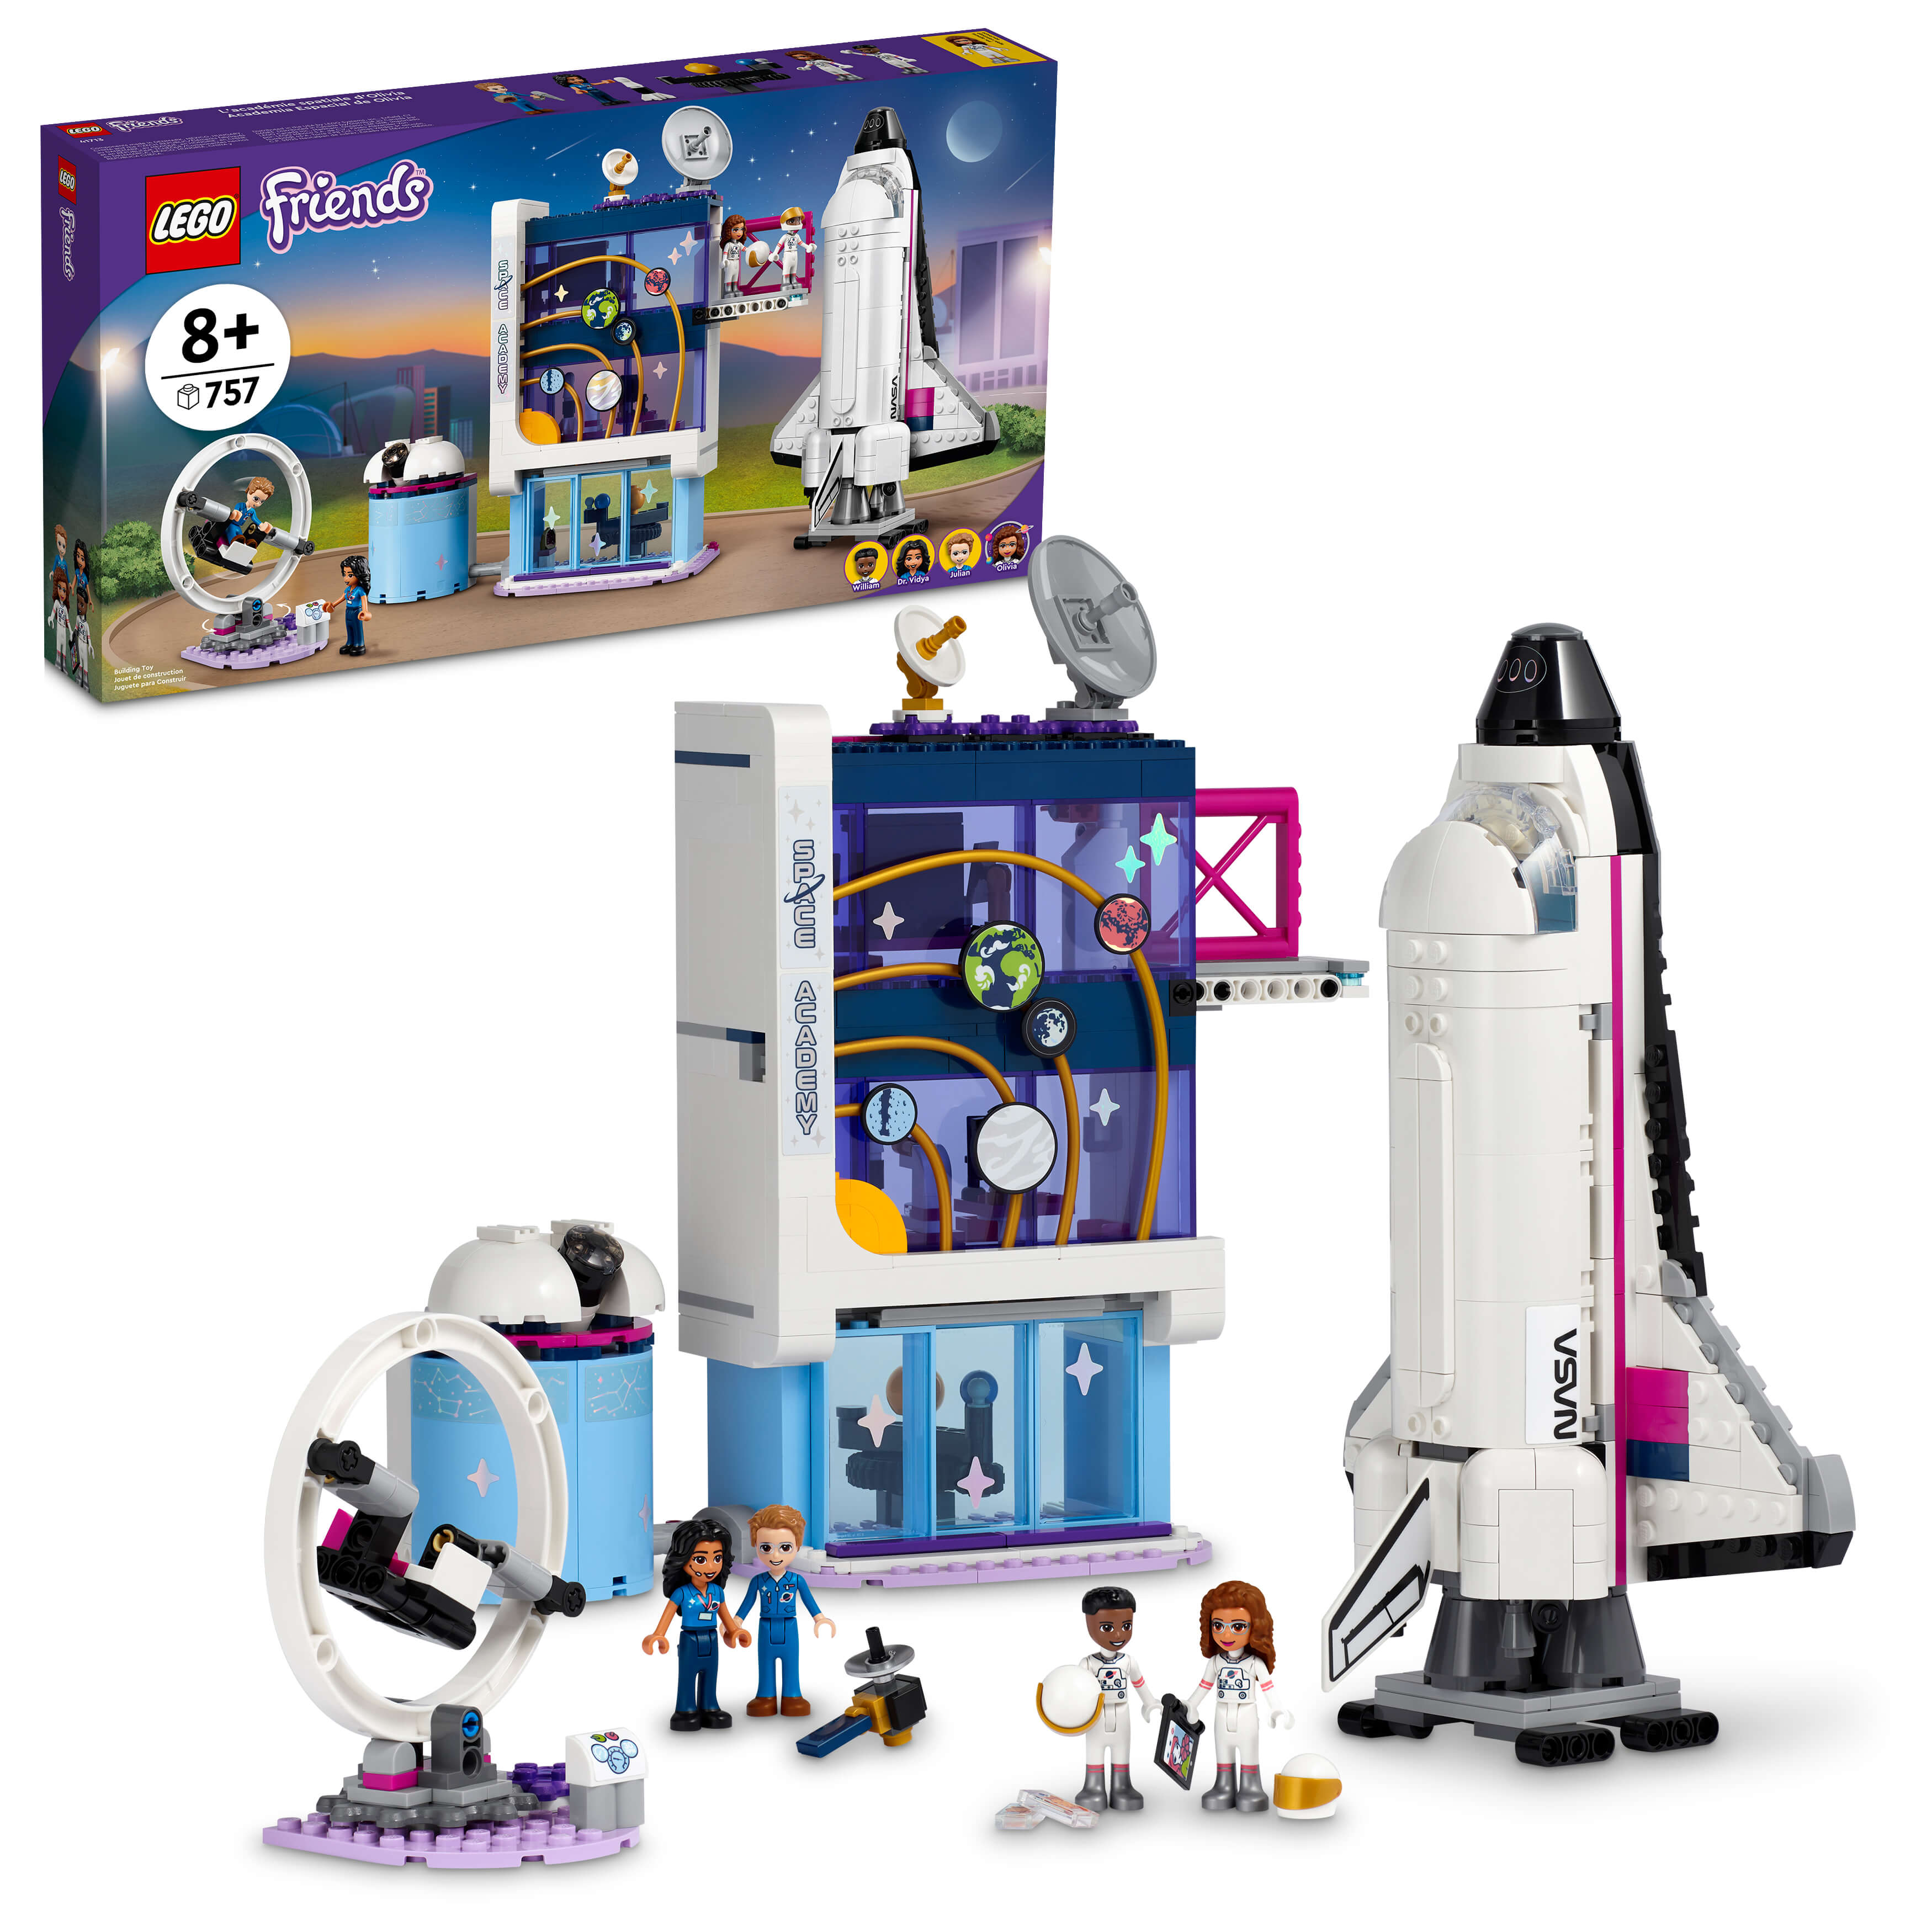 LEGO® Friends Olivias Space Academy 41713 Building Kit (757 Pieces)